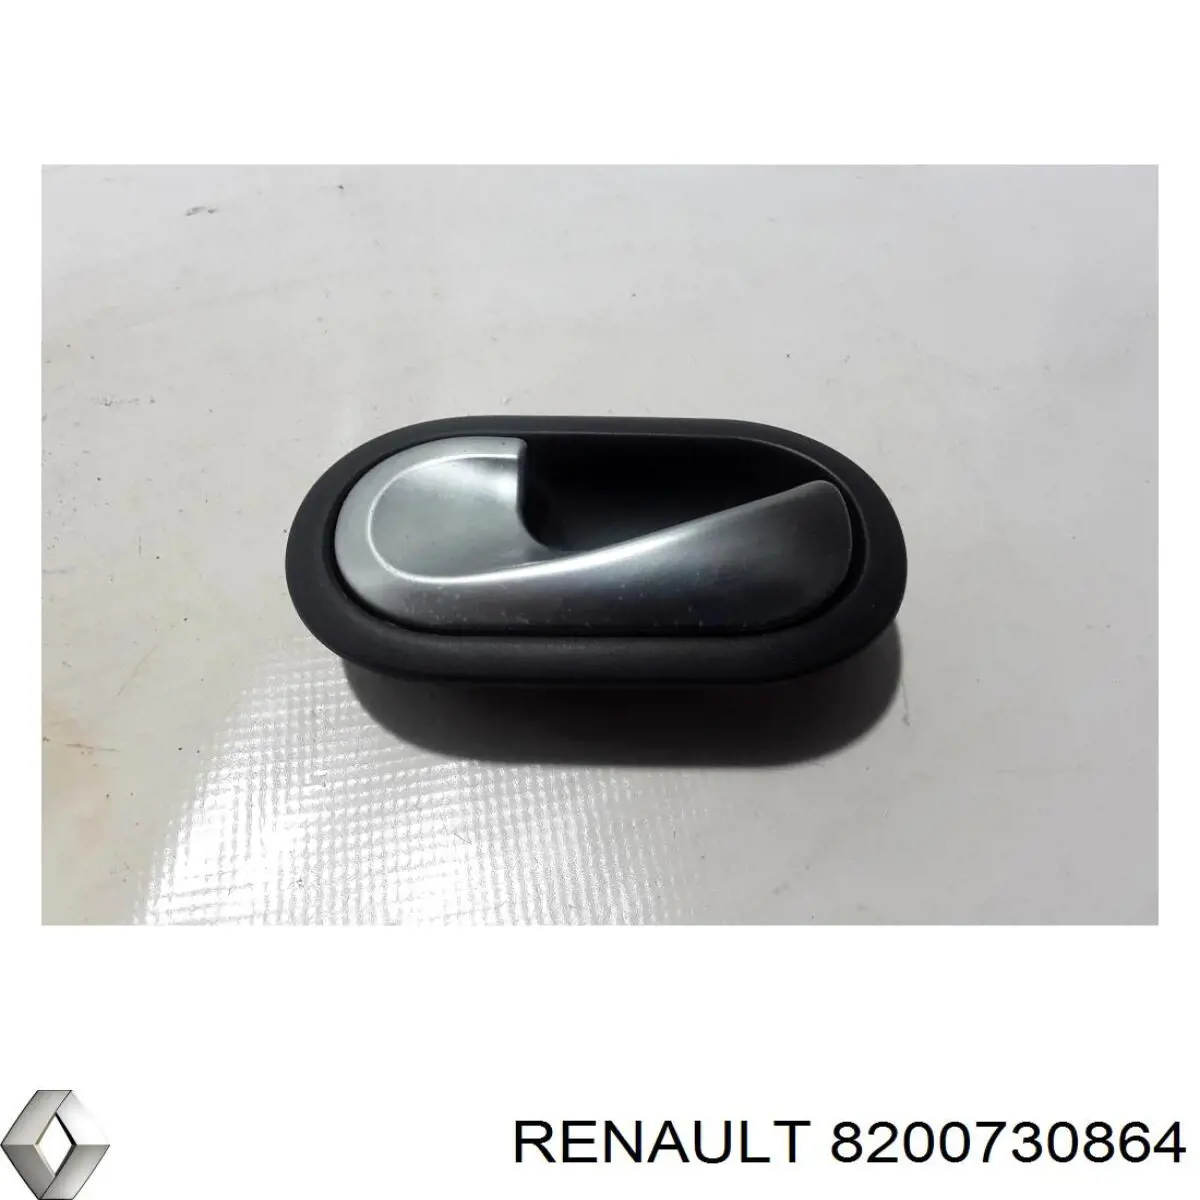 8200730864 Renault (RVI)